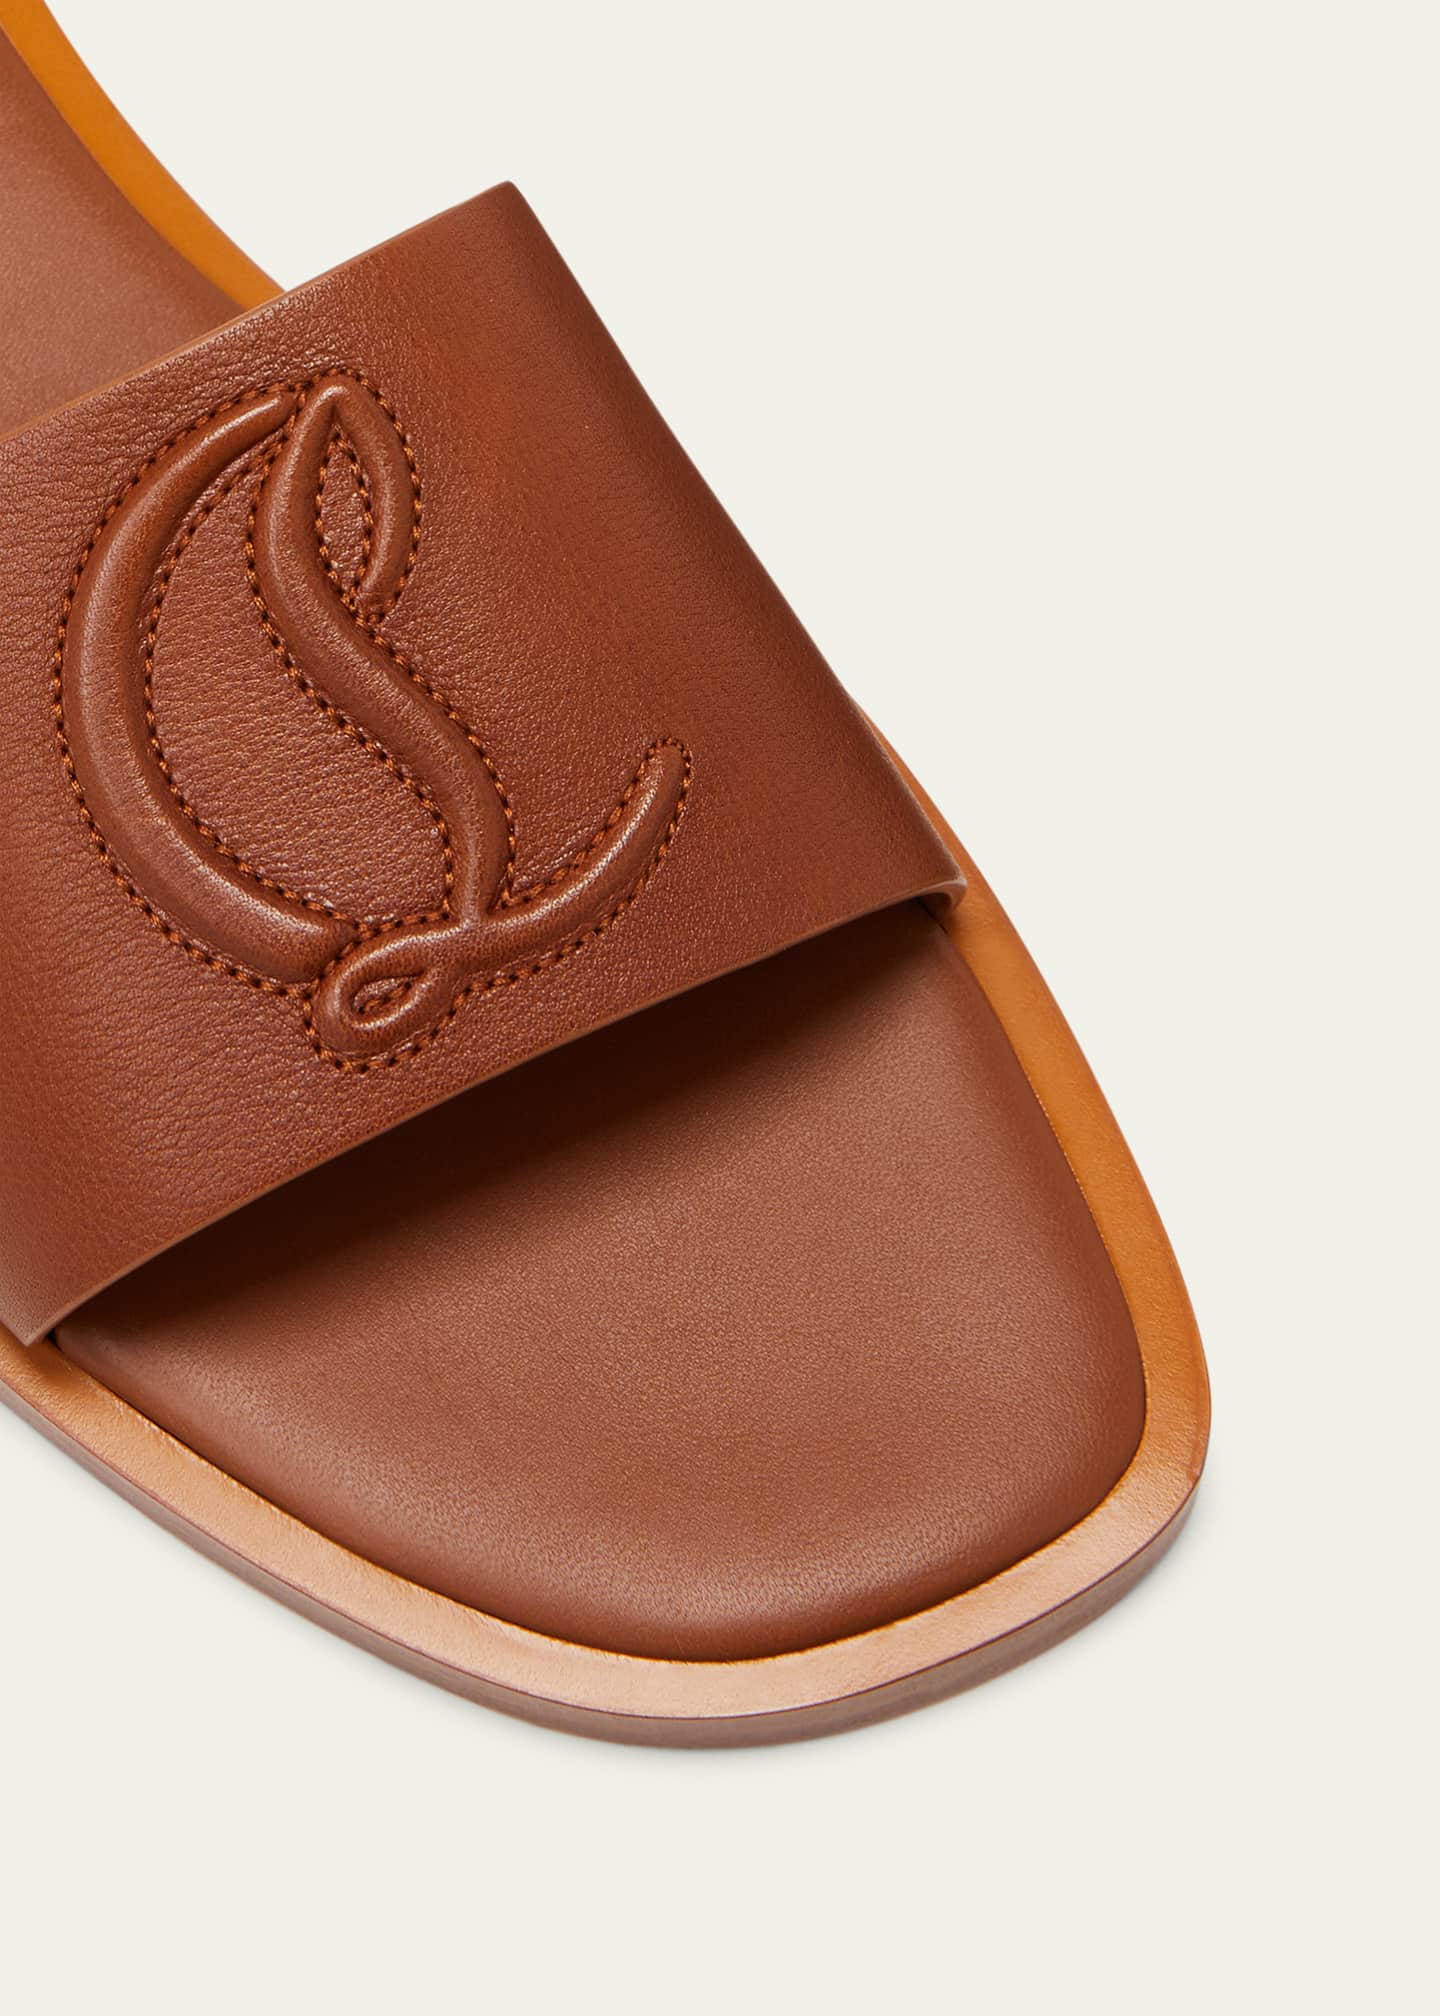 Christian Louboutin Leather Logo Red Sole Slide Sandals - Bergdorf Goodman